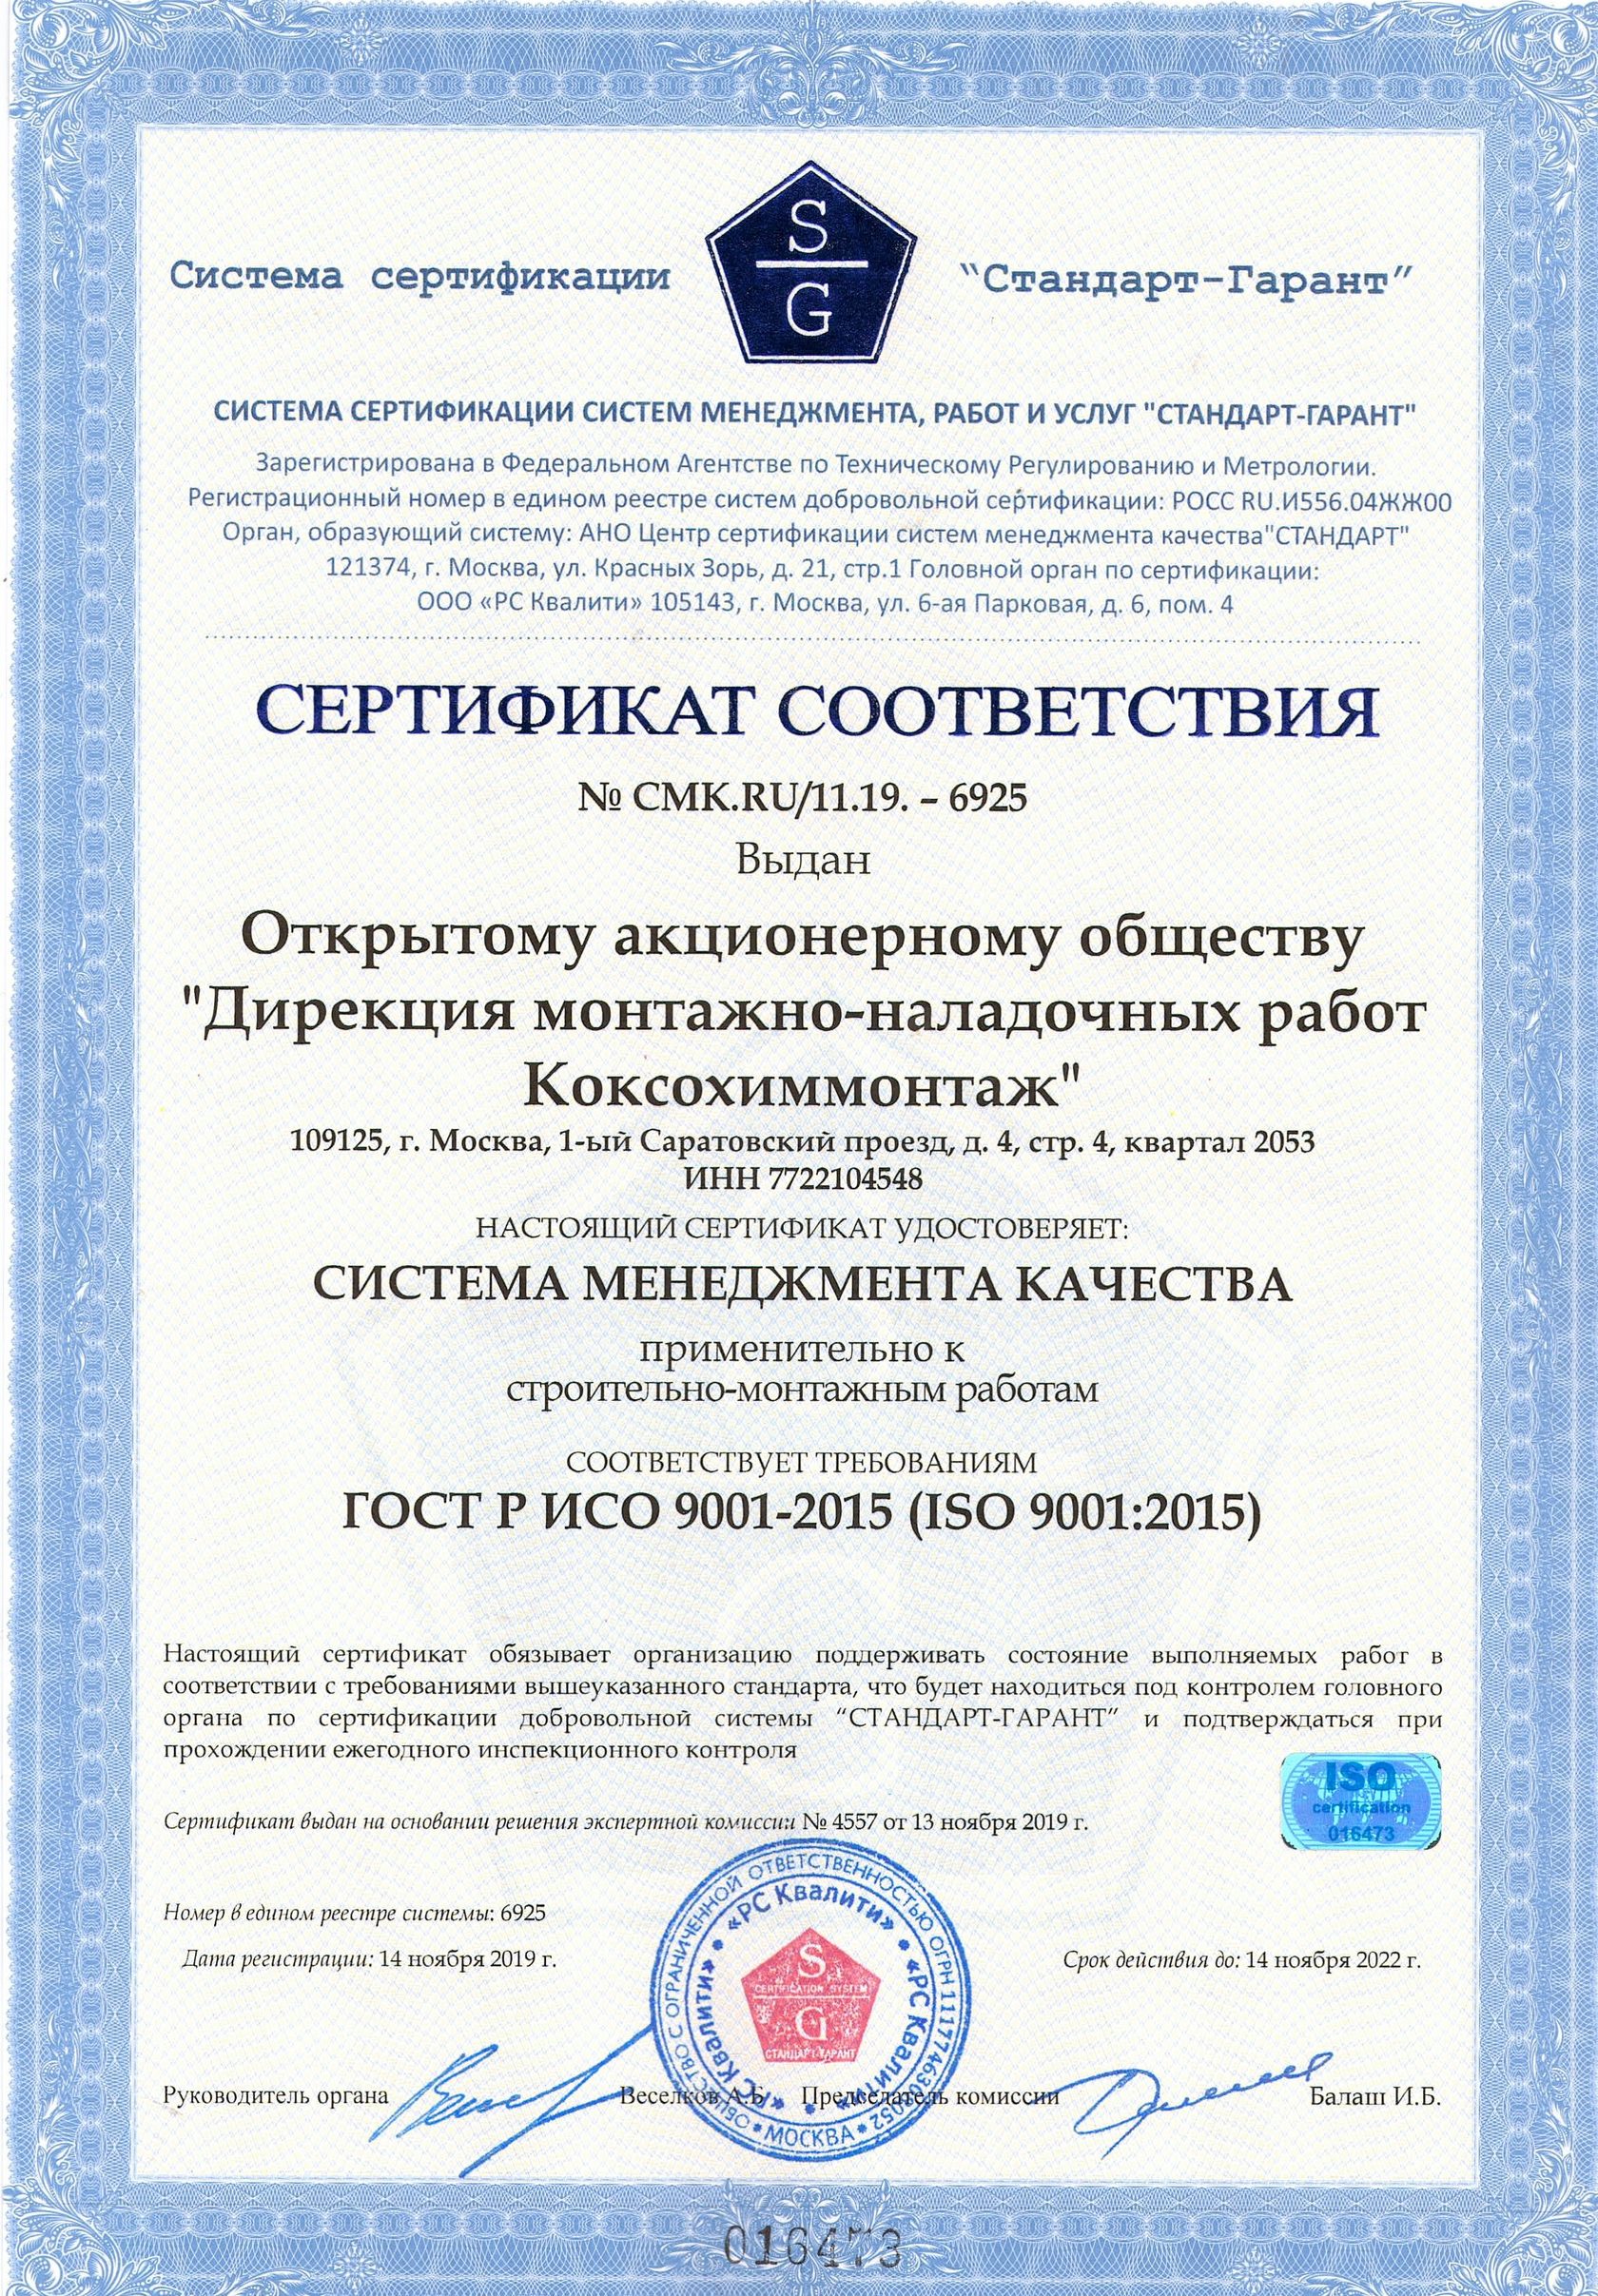 Технология сертификации. СМК стандарт. АО арктические технологии сертификат соответствия. Лицензия сертификация. АРКТЕХ сертификат соответствия.